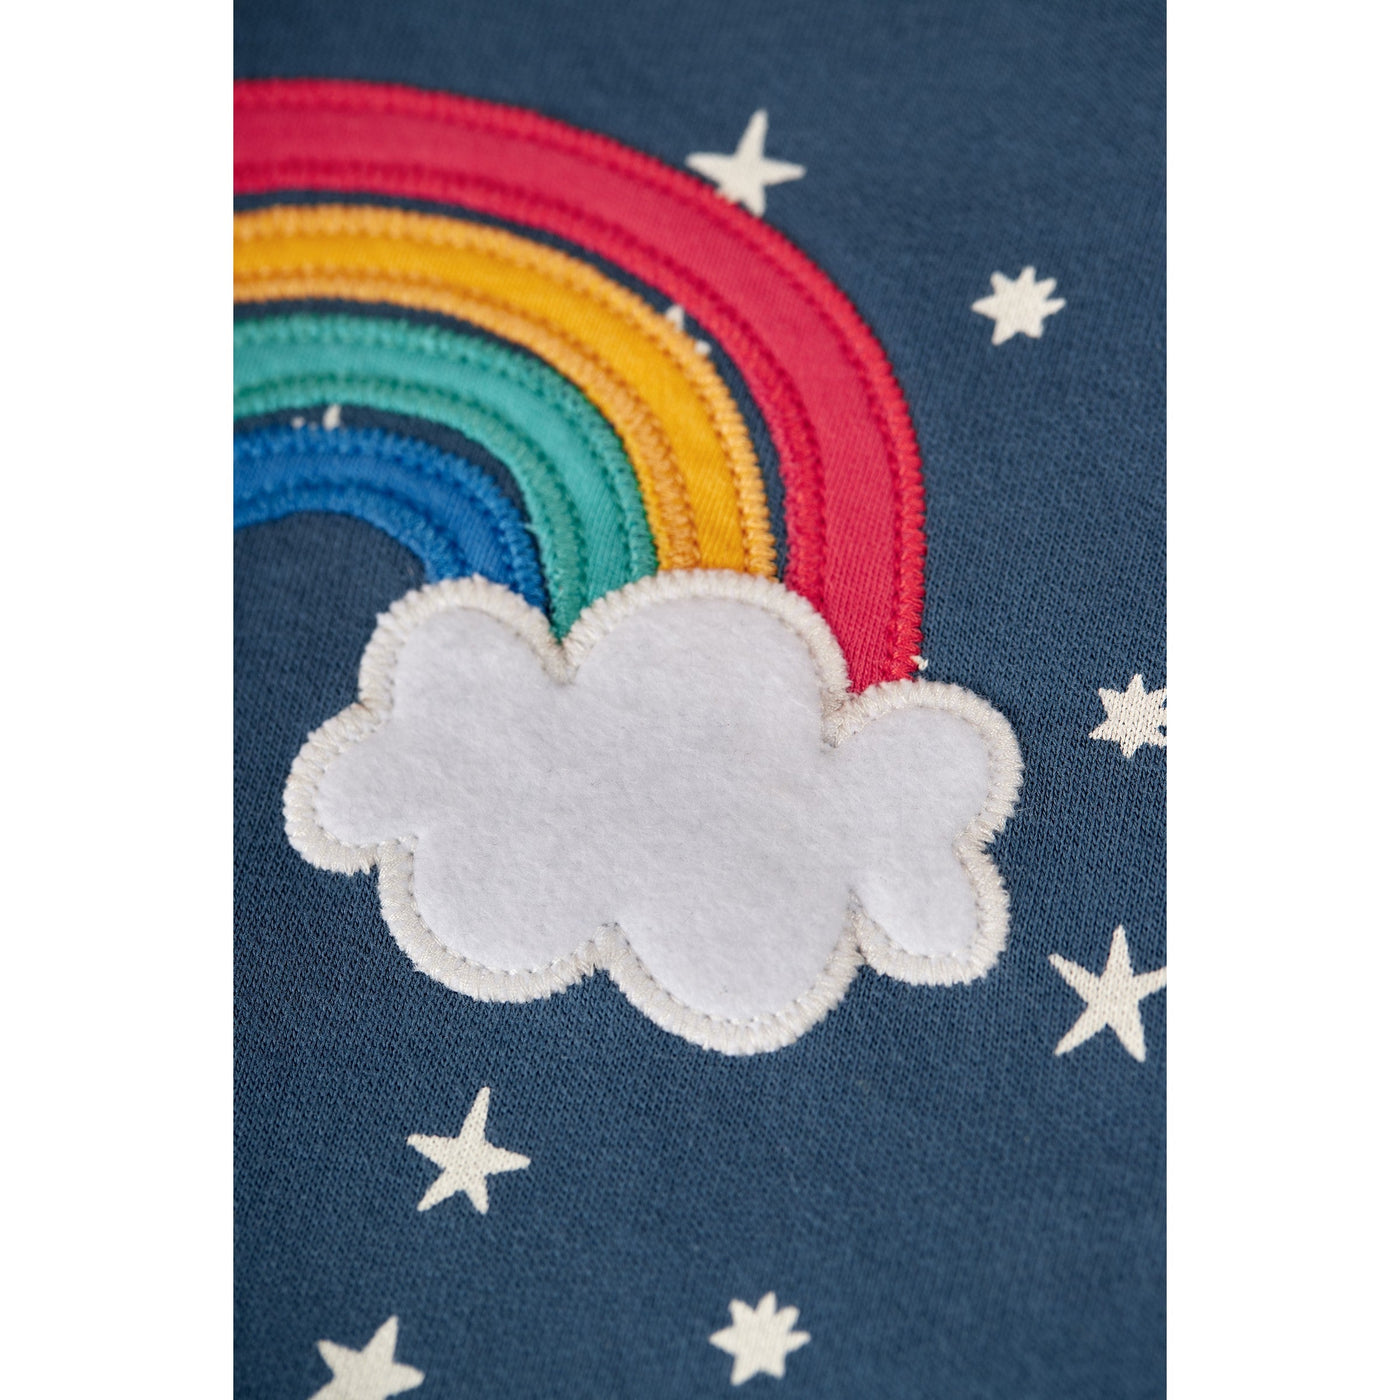 Eloise Jumper Dress - Abisko Stars-Rainbow by Frugi